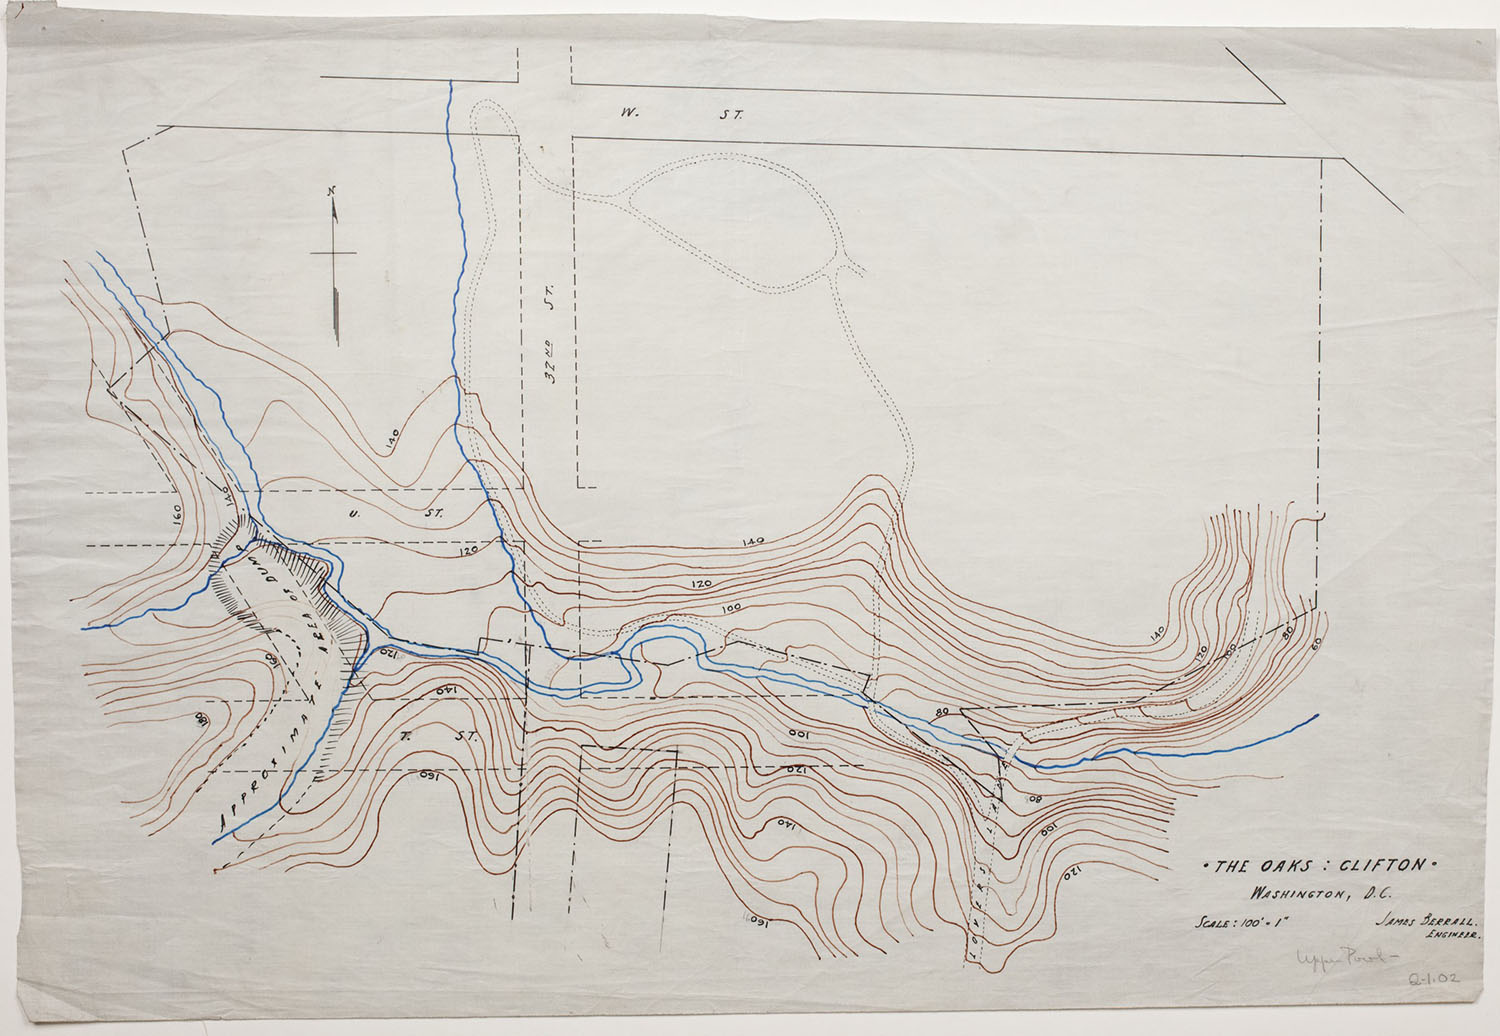 Topographic map, The Oaks: Clifton, Washington D.C.